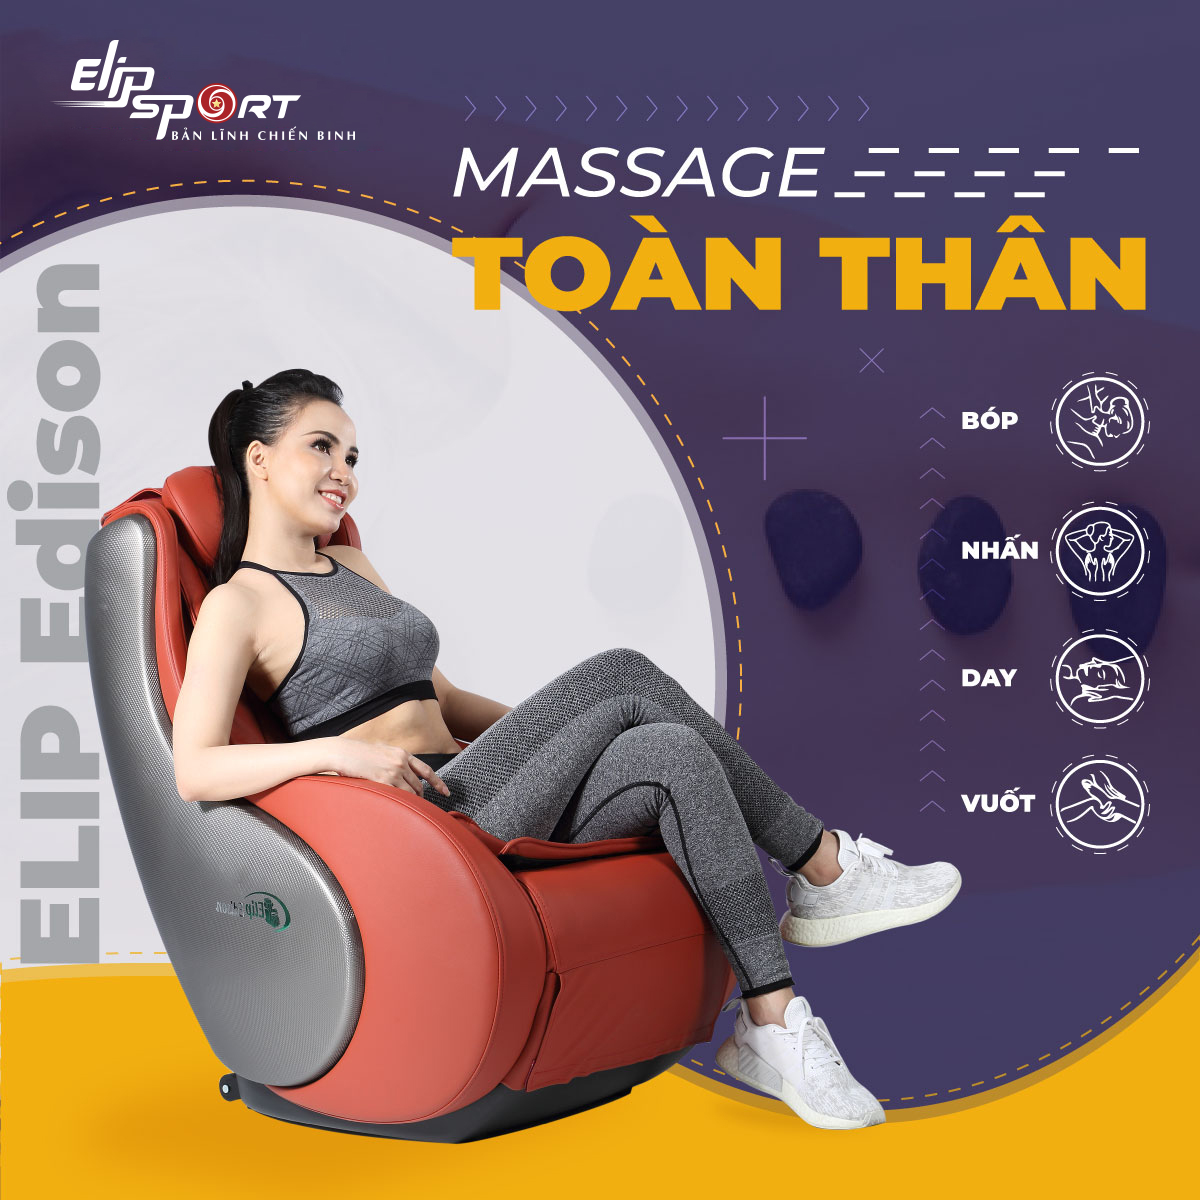   Ghế massage dưới 20 triệu ELIP Edison